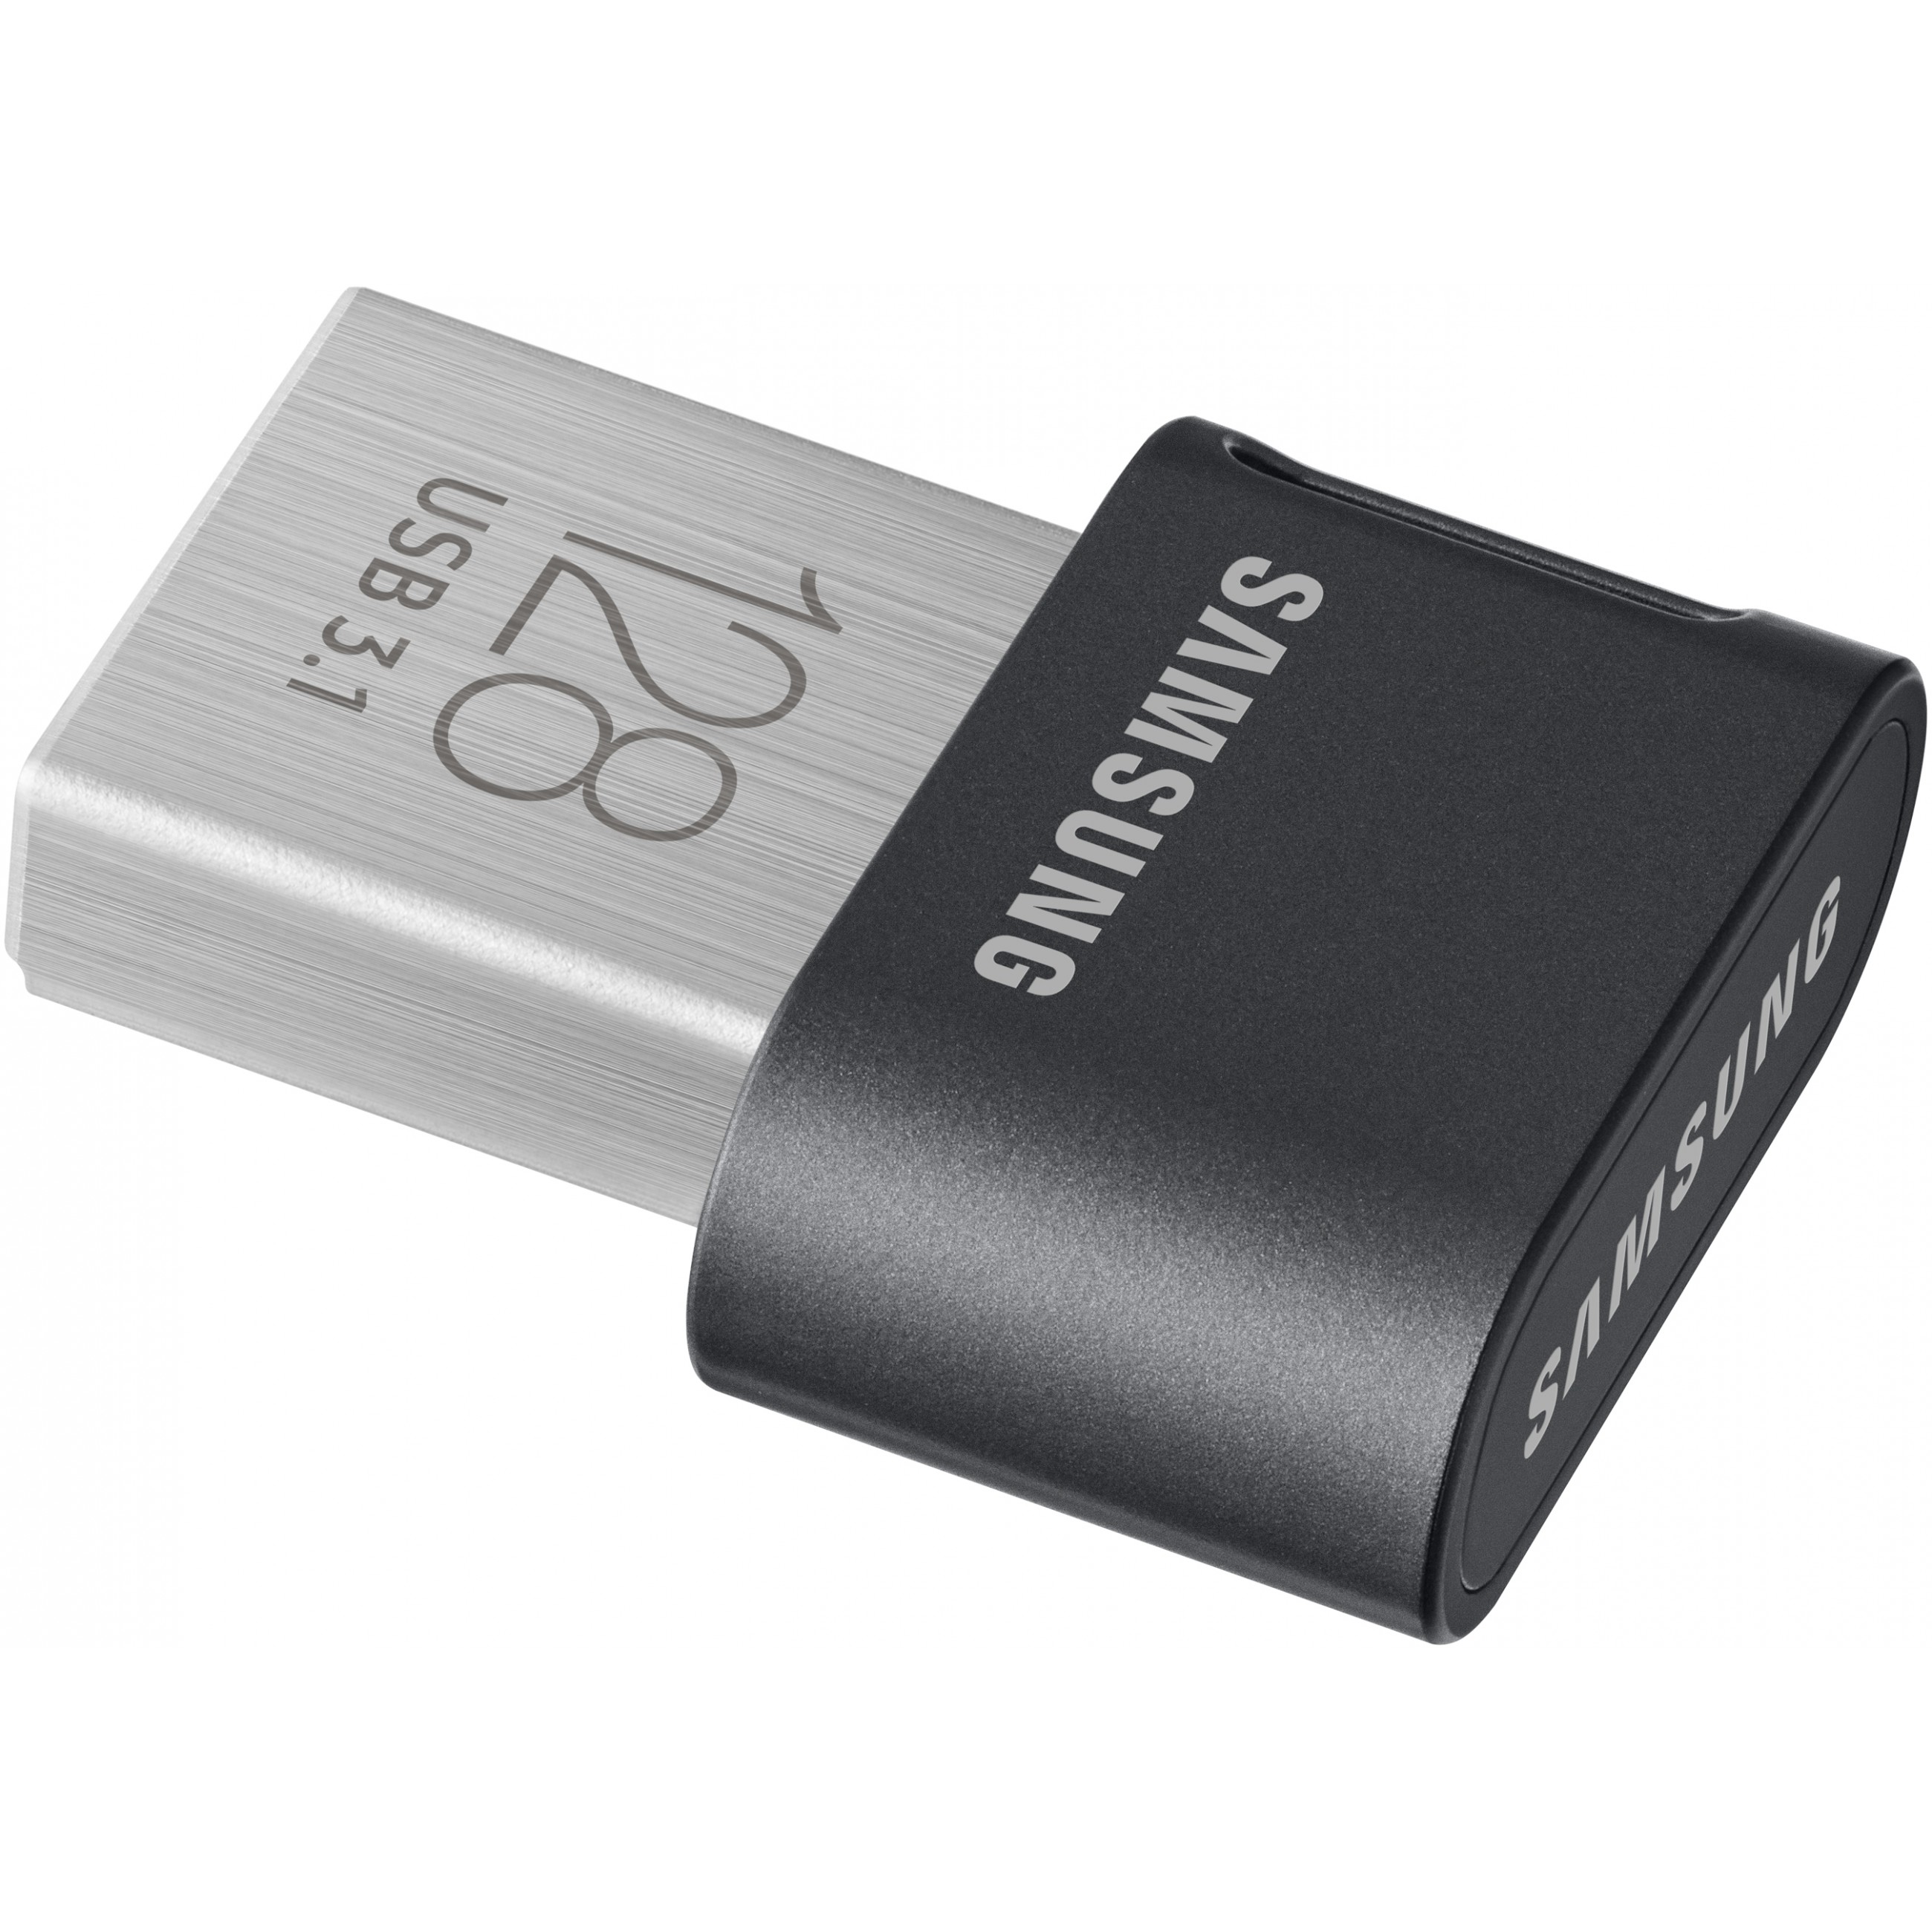 SAMSUNG MUF-128AB/APC, USB-Stick, Samsung MUF-128AB USB  (BILD6)